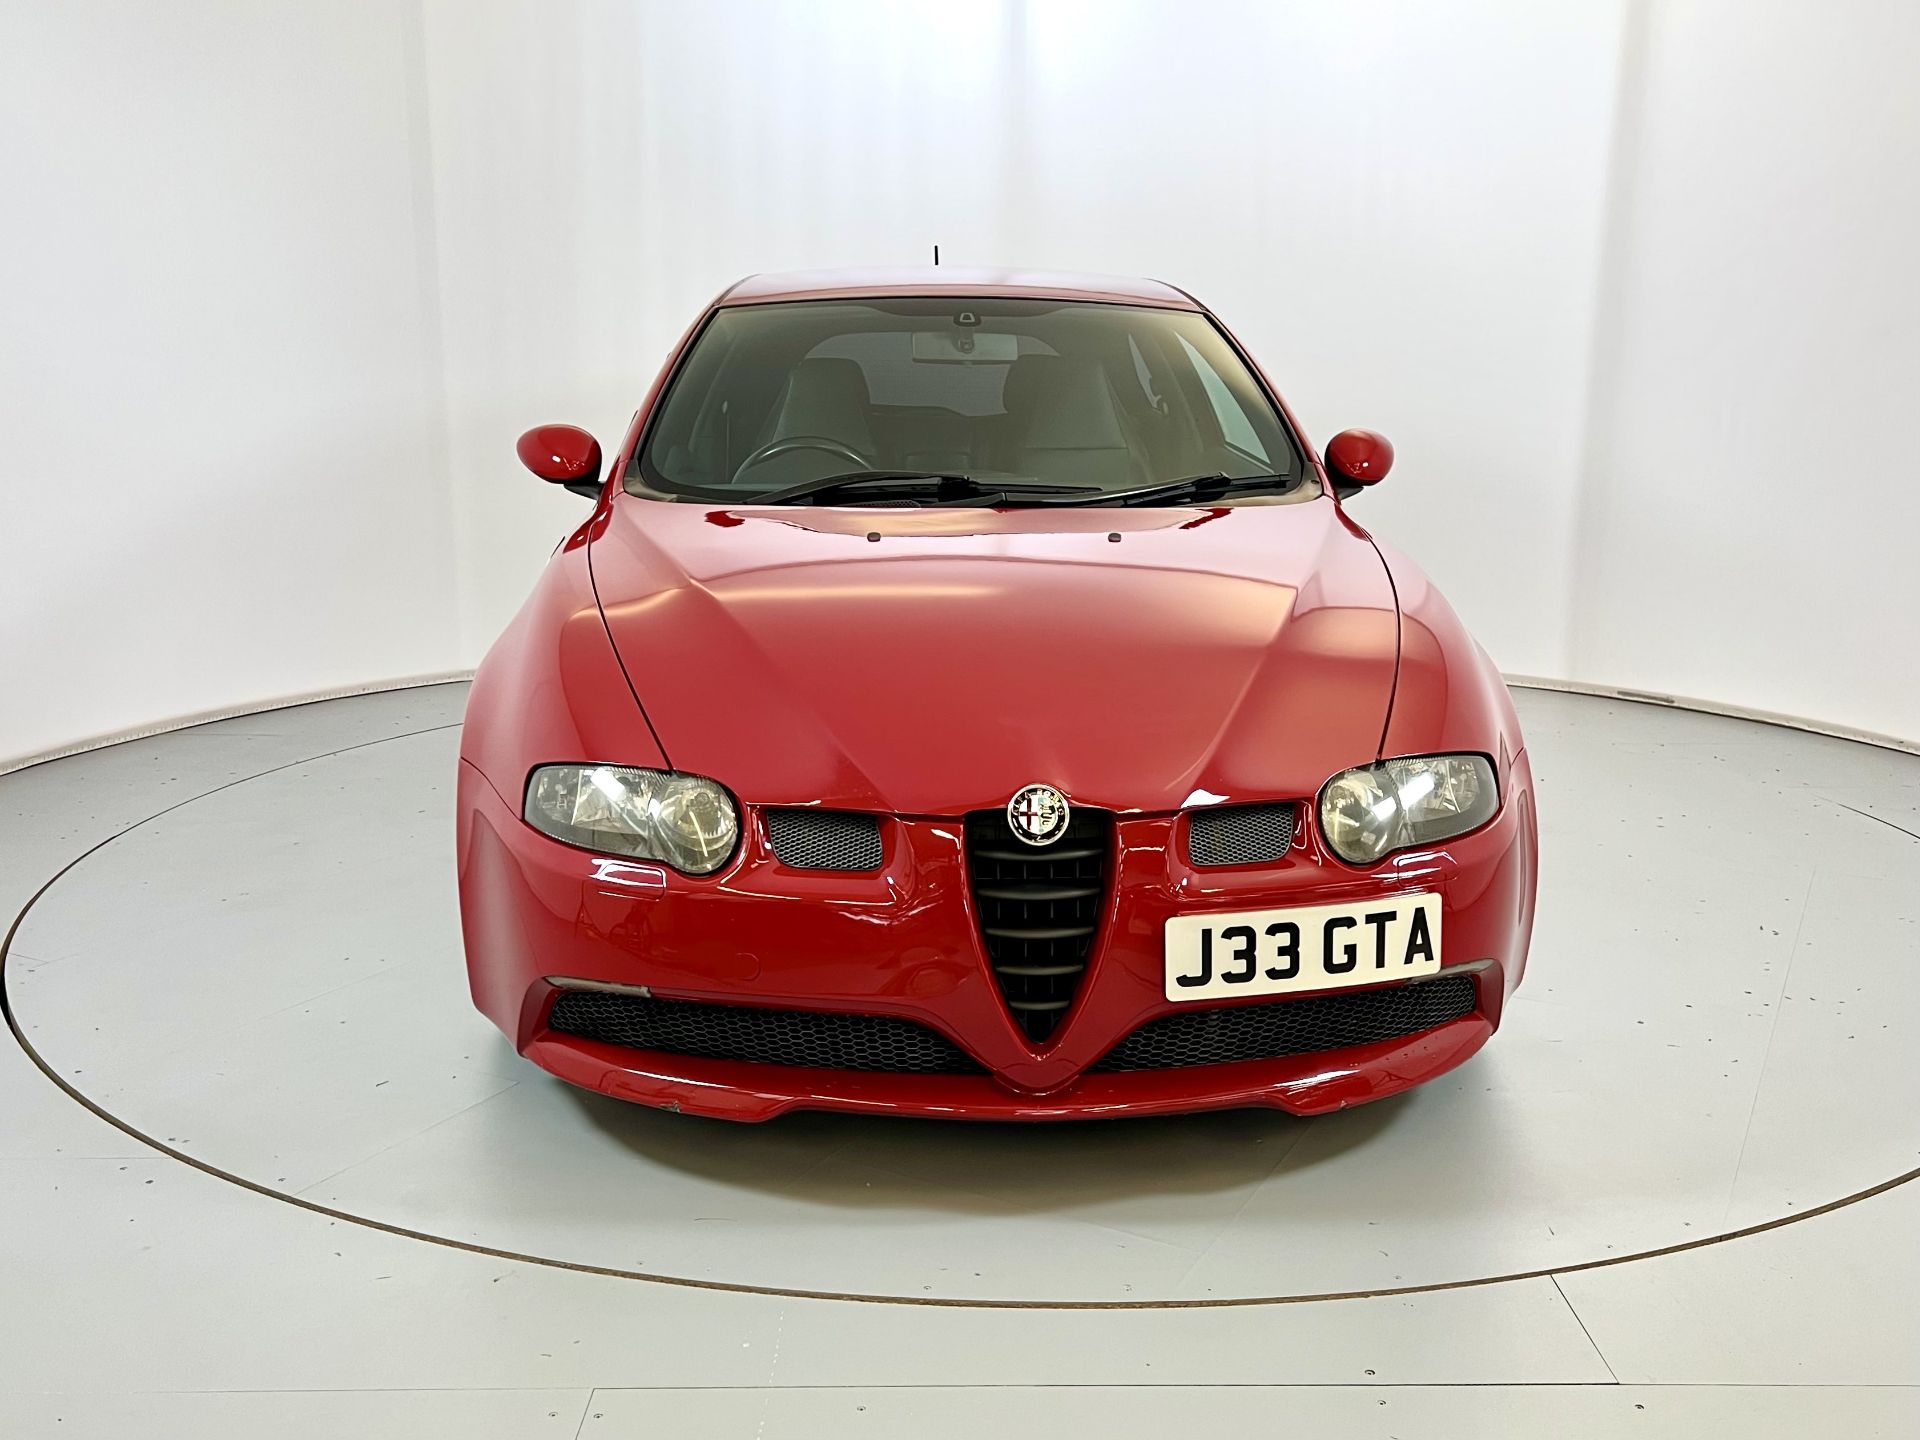 Alfa Romeo 147 GTA - Image 2 of 31